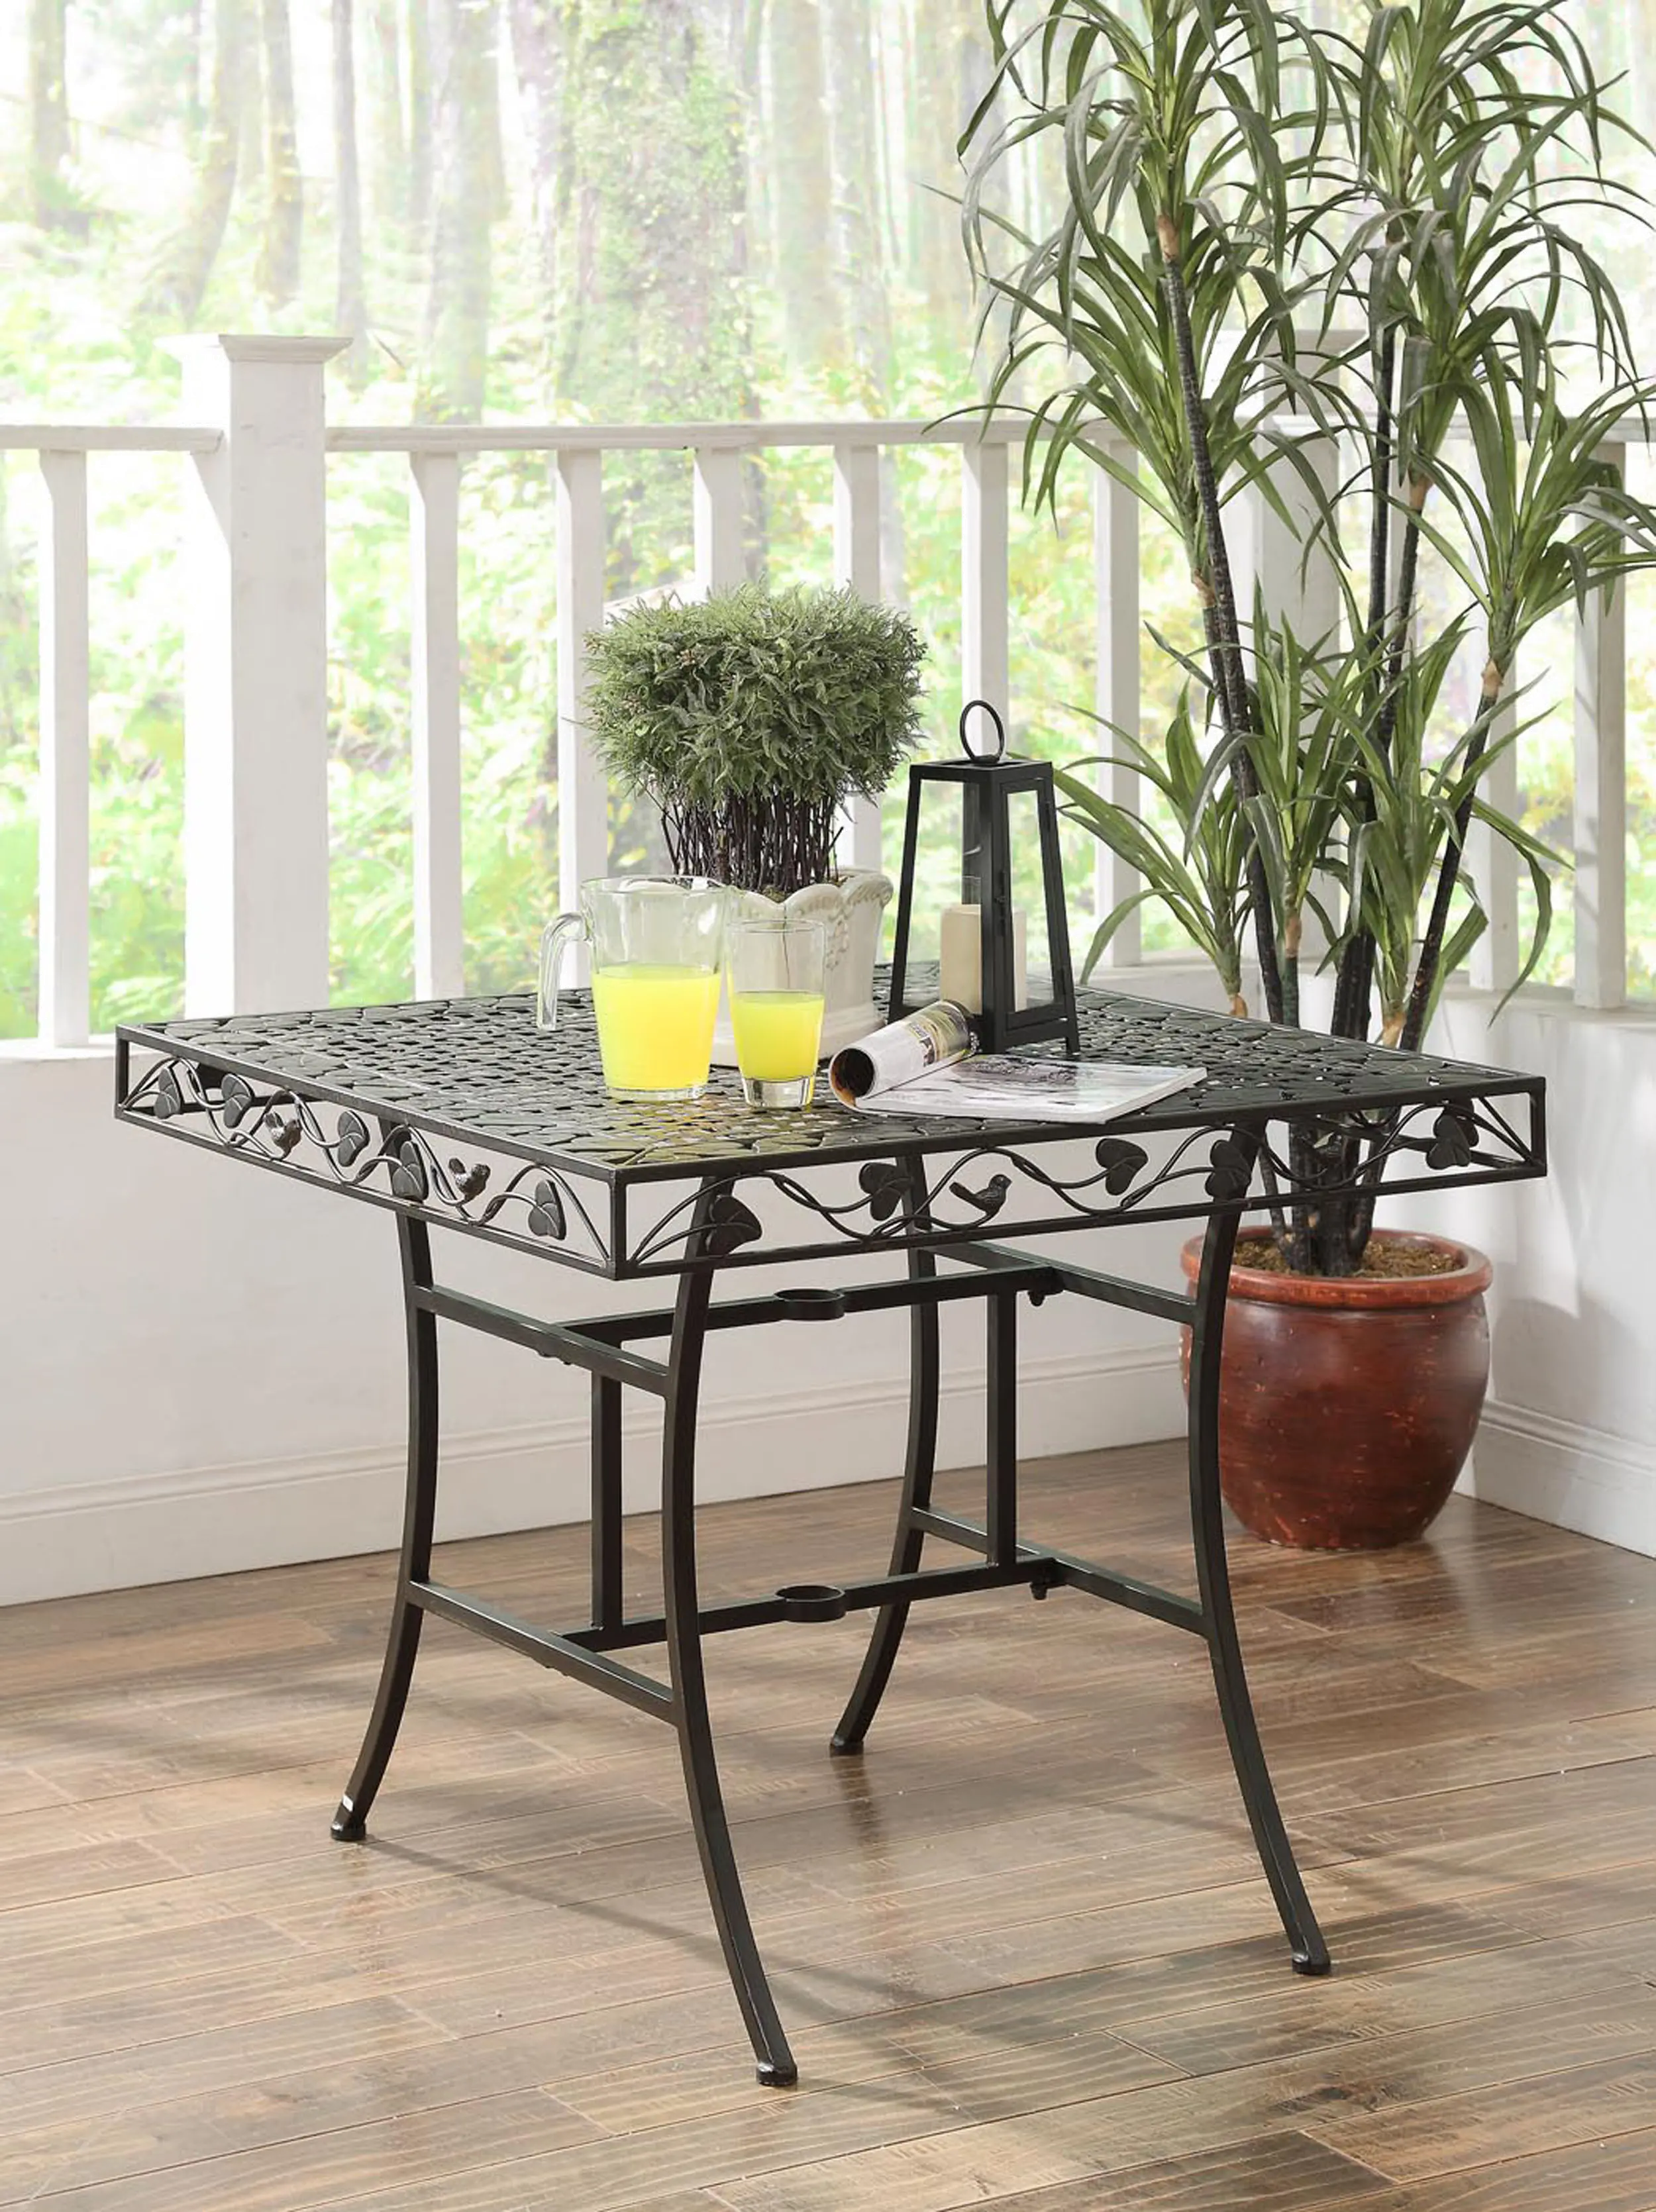 Photos - Garden Furniture 4D Concepts Metal Square Outdoor Patio Table - Ivy League 120260